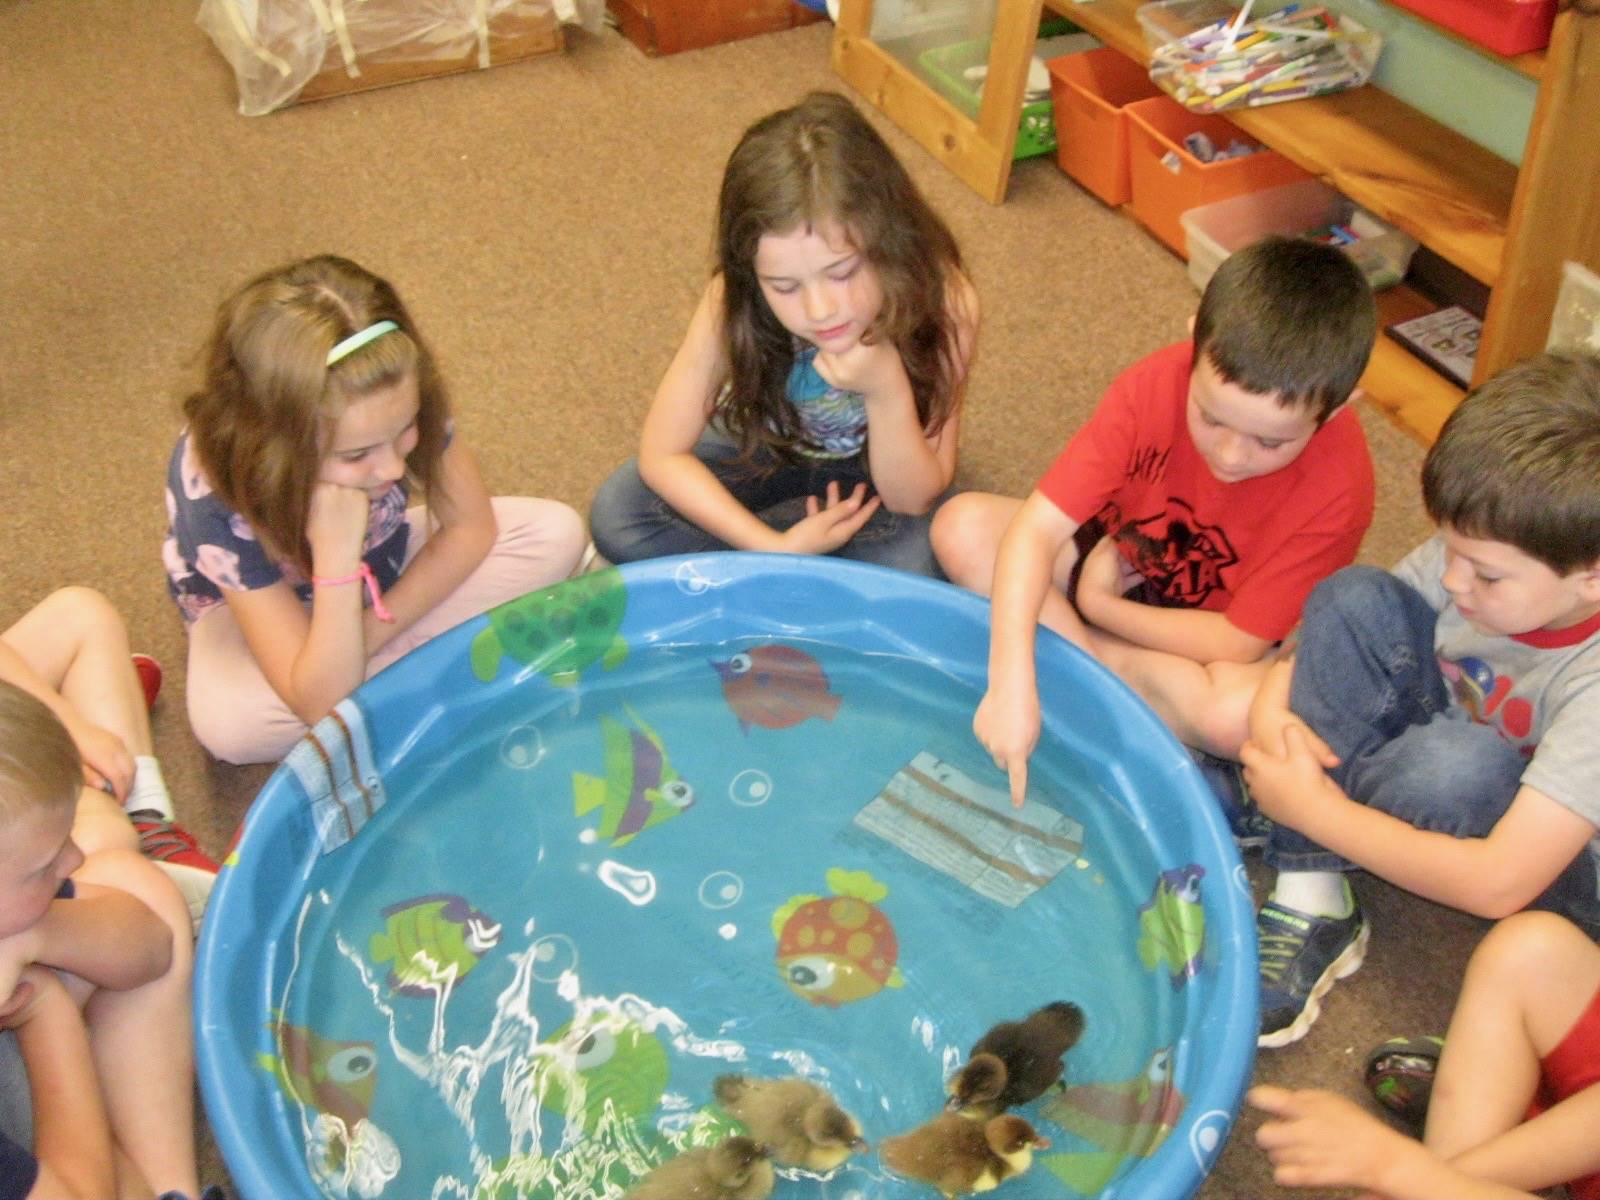  4 students watch ducks swim in a pool.